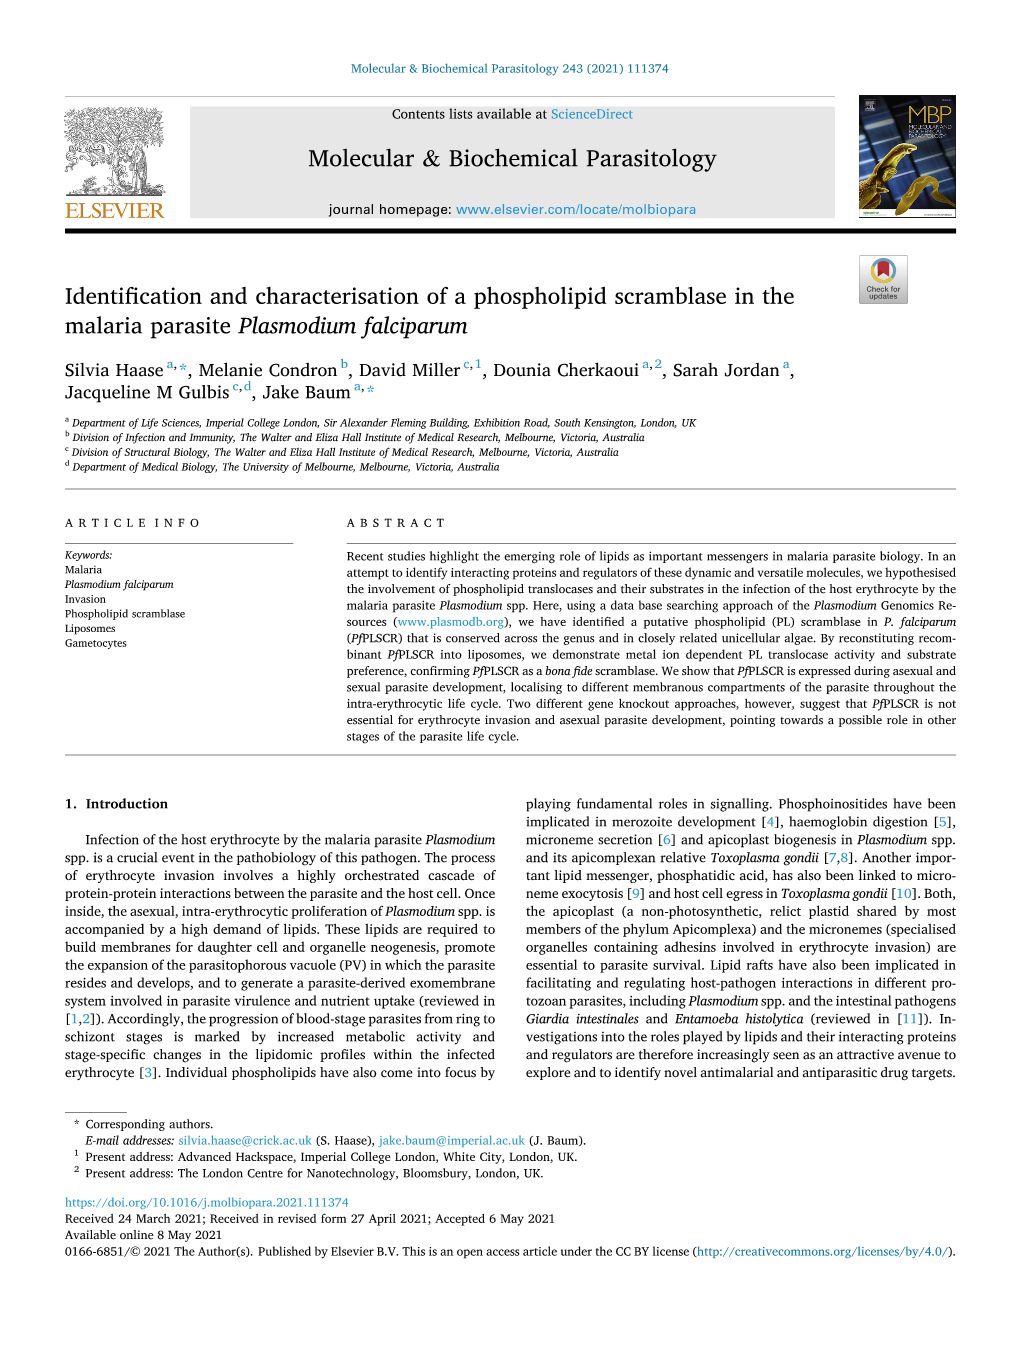 Identification and Characterisation of a Phospholipid Scramblase in the Malaria Parasite Plasmodium Falciparum